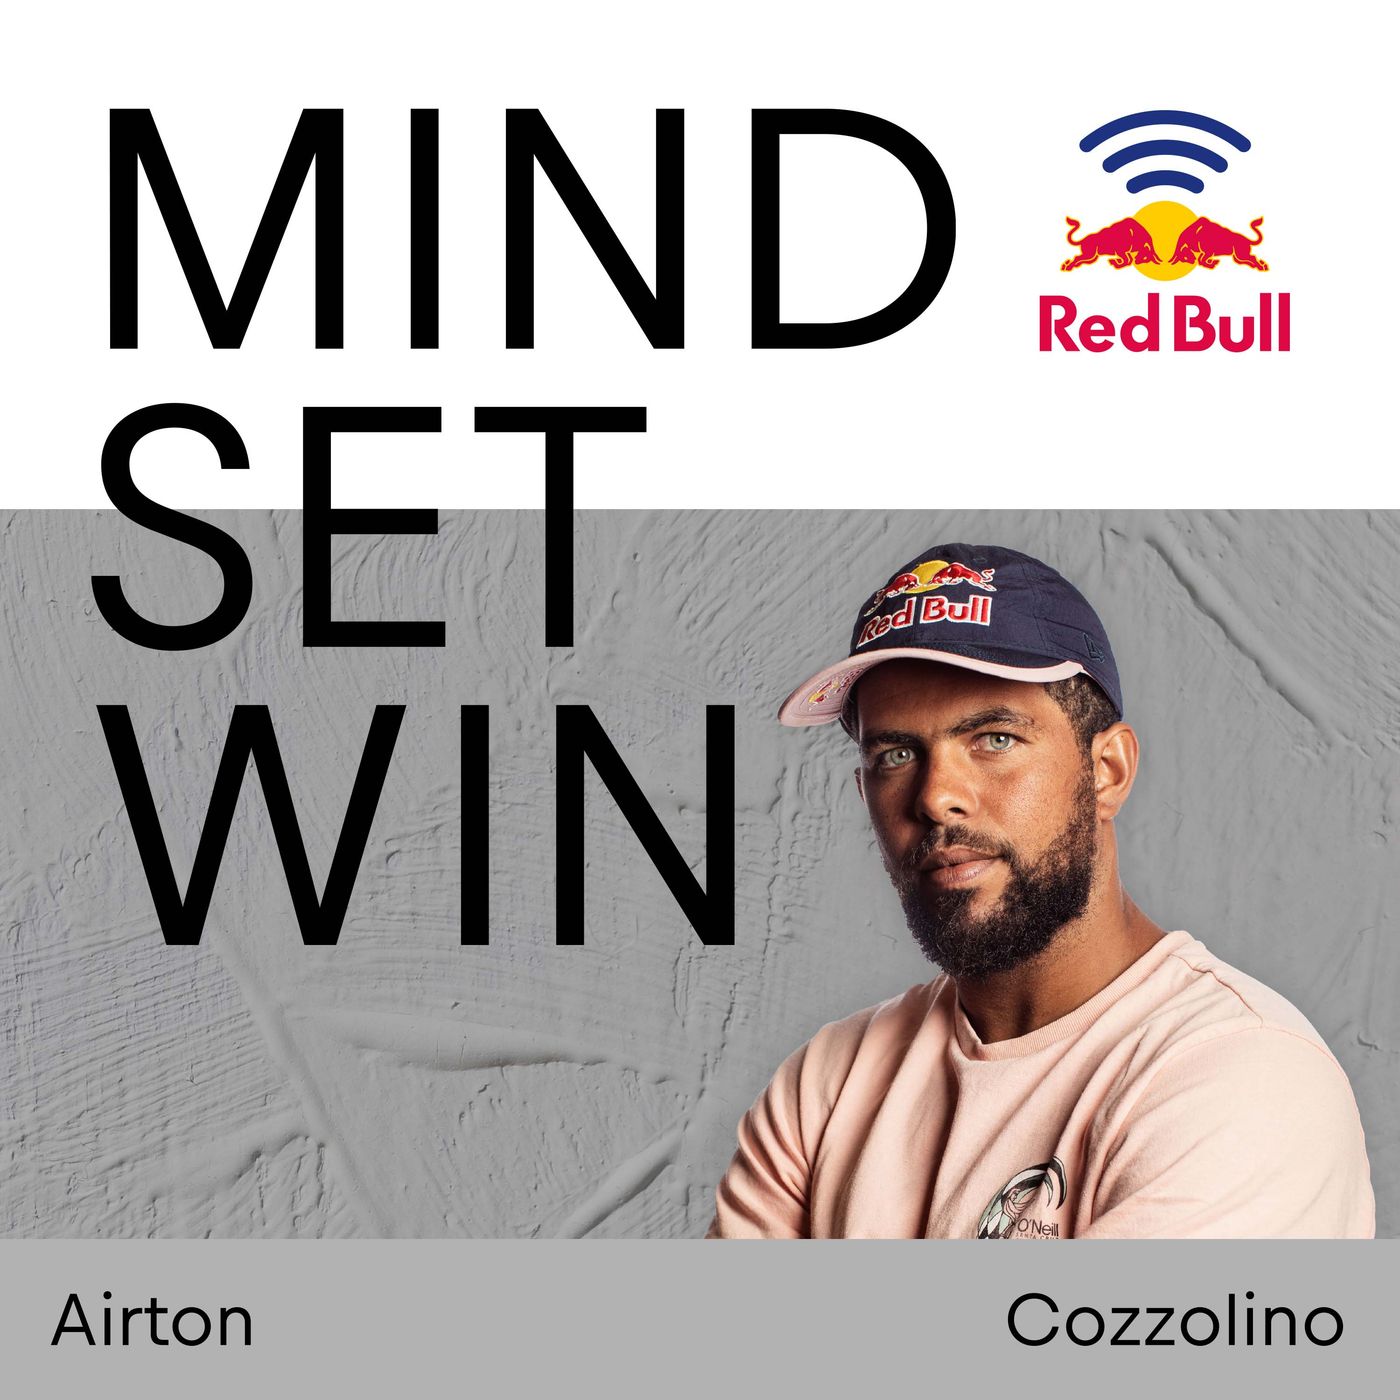 Kitesurf world champion and progressive rider Airton Cozzolino – daring to dream